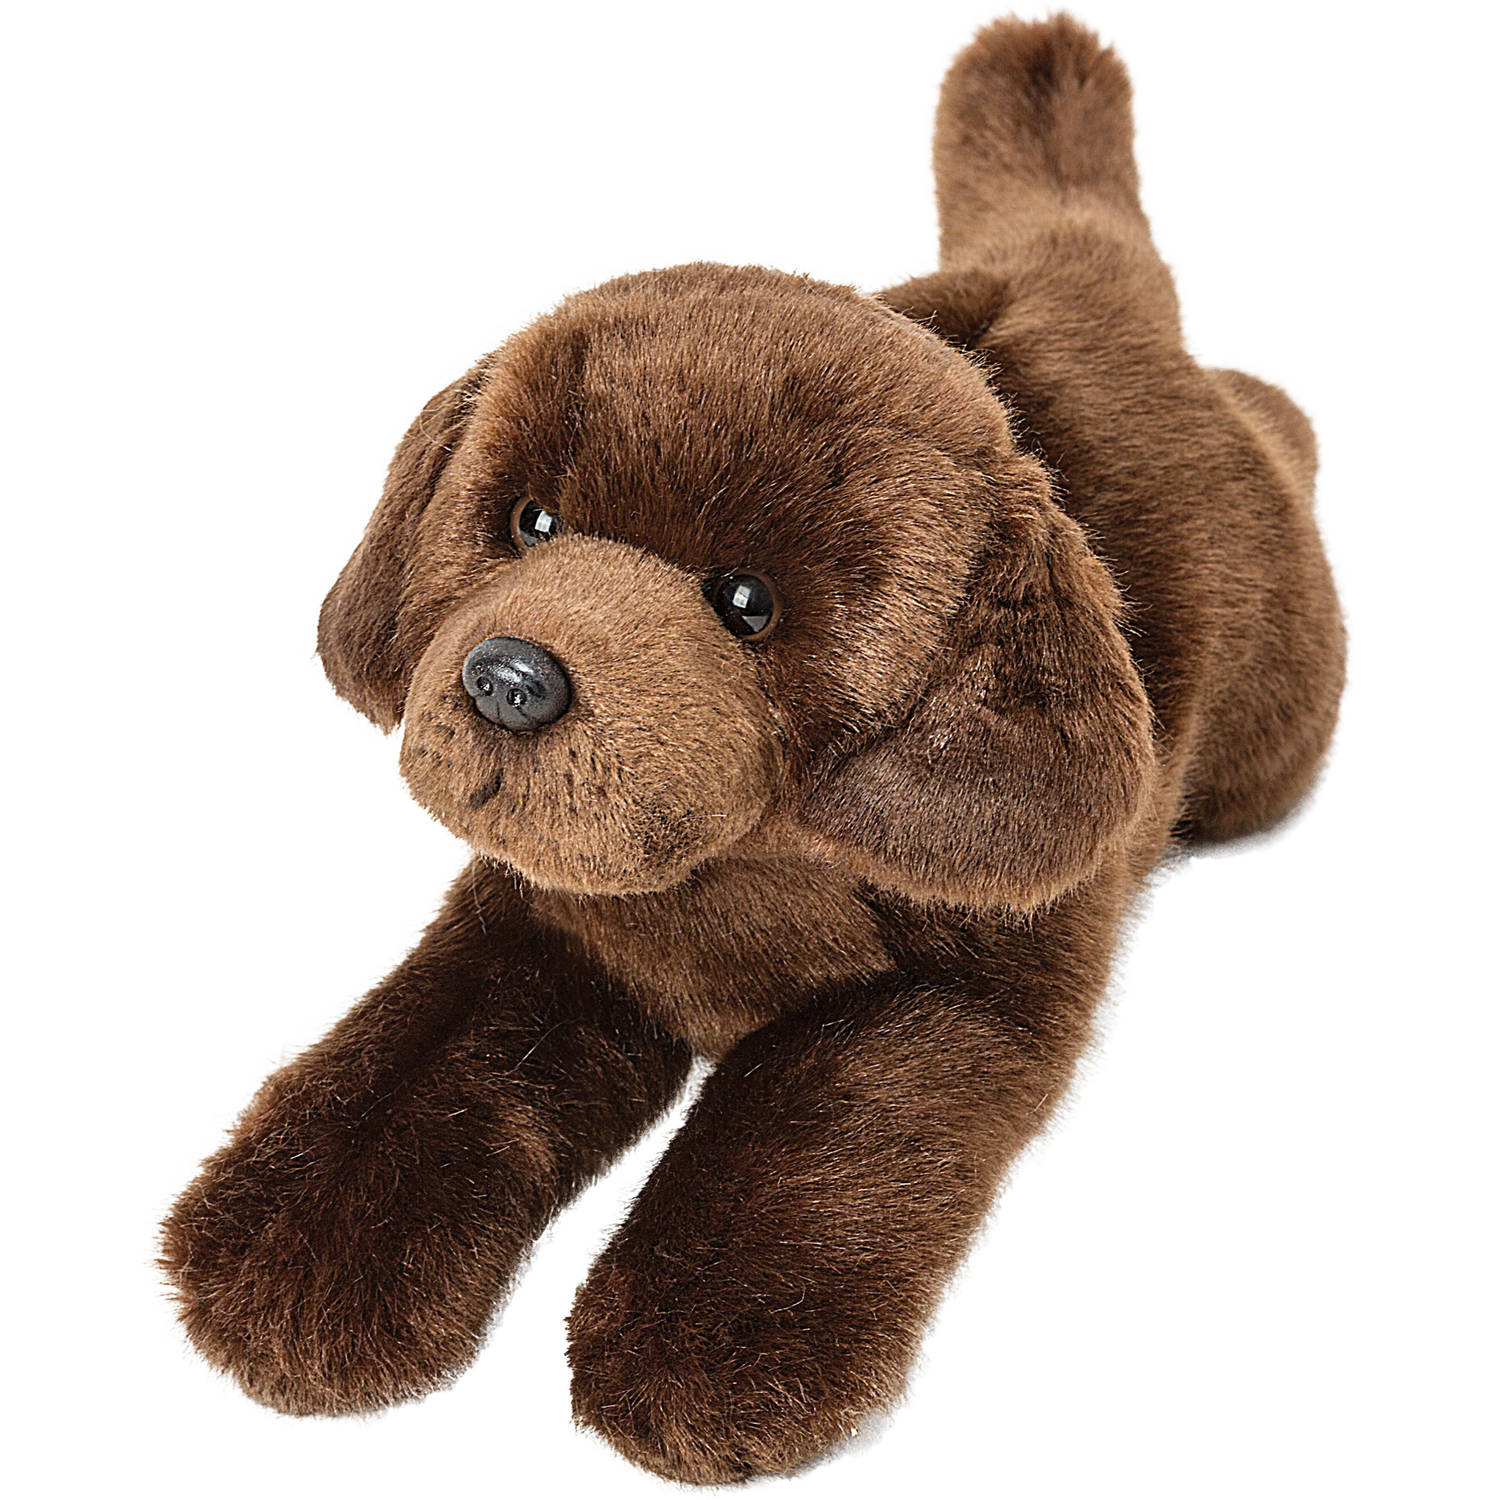 Pluche knuffel dieren bruine Labrador hond 30 cm - Speelgoed knuffelbeesten - Honden soorten